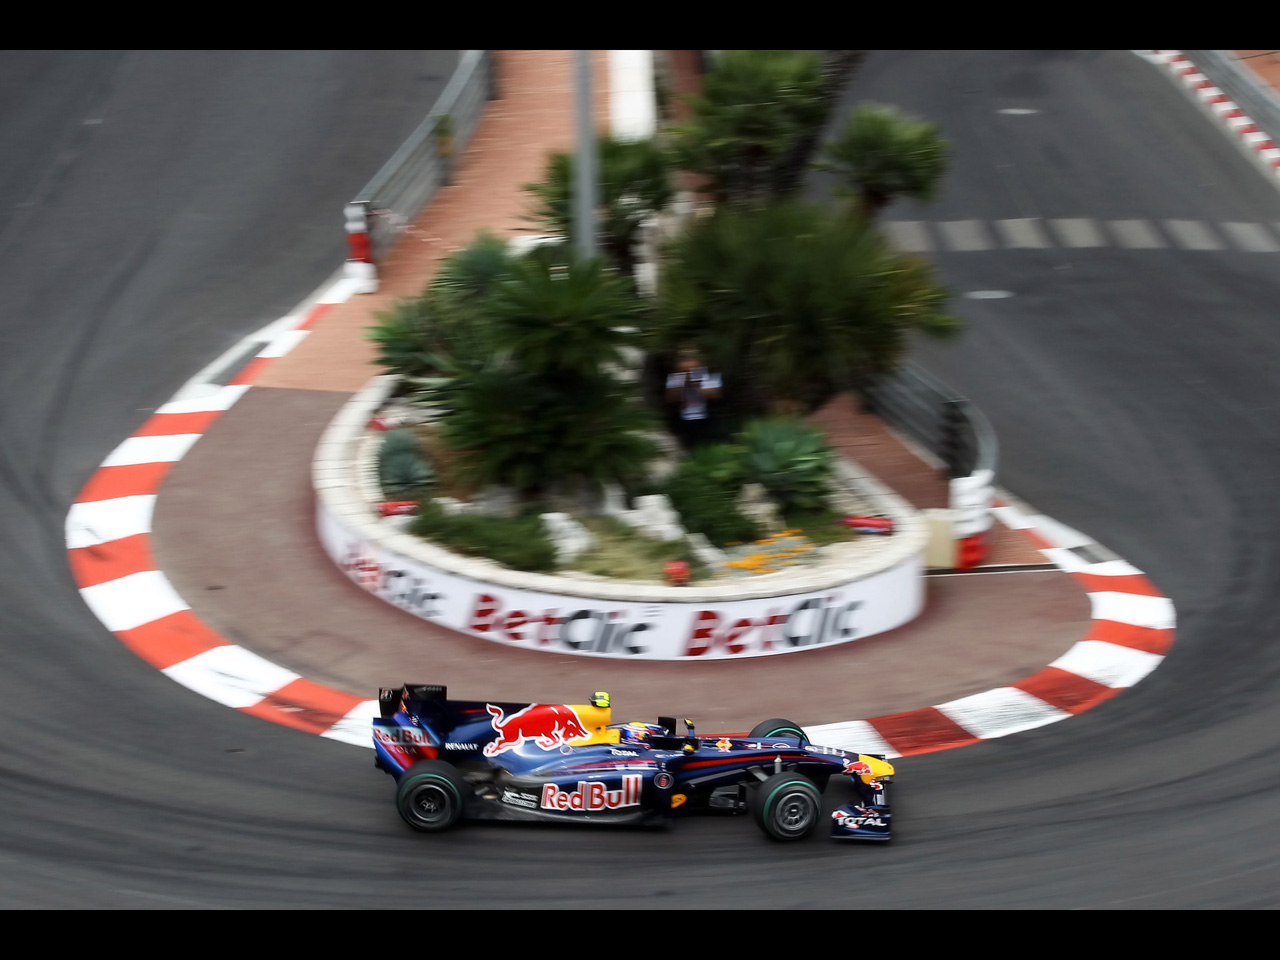 Red Bull Rb6 F1 Grand Prix Of Monaco Wallpaper